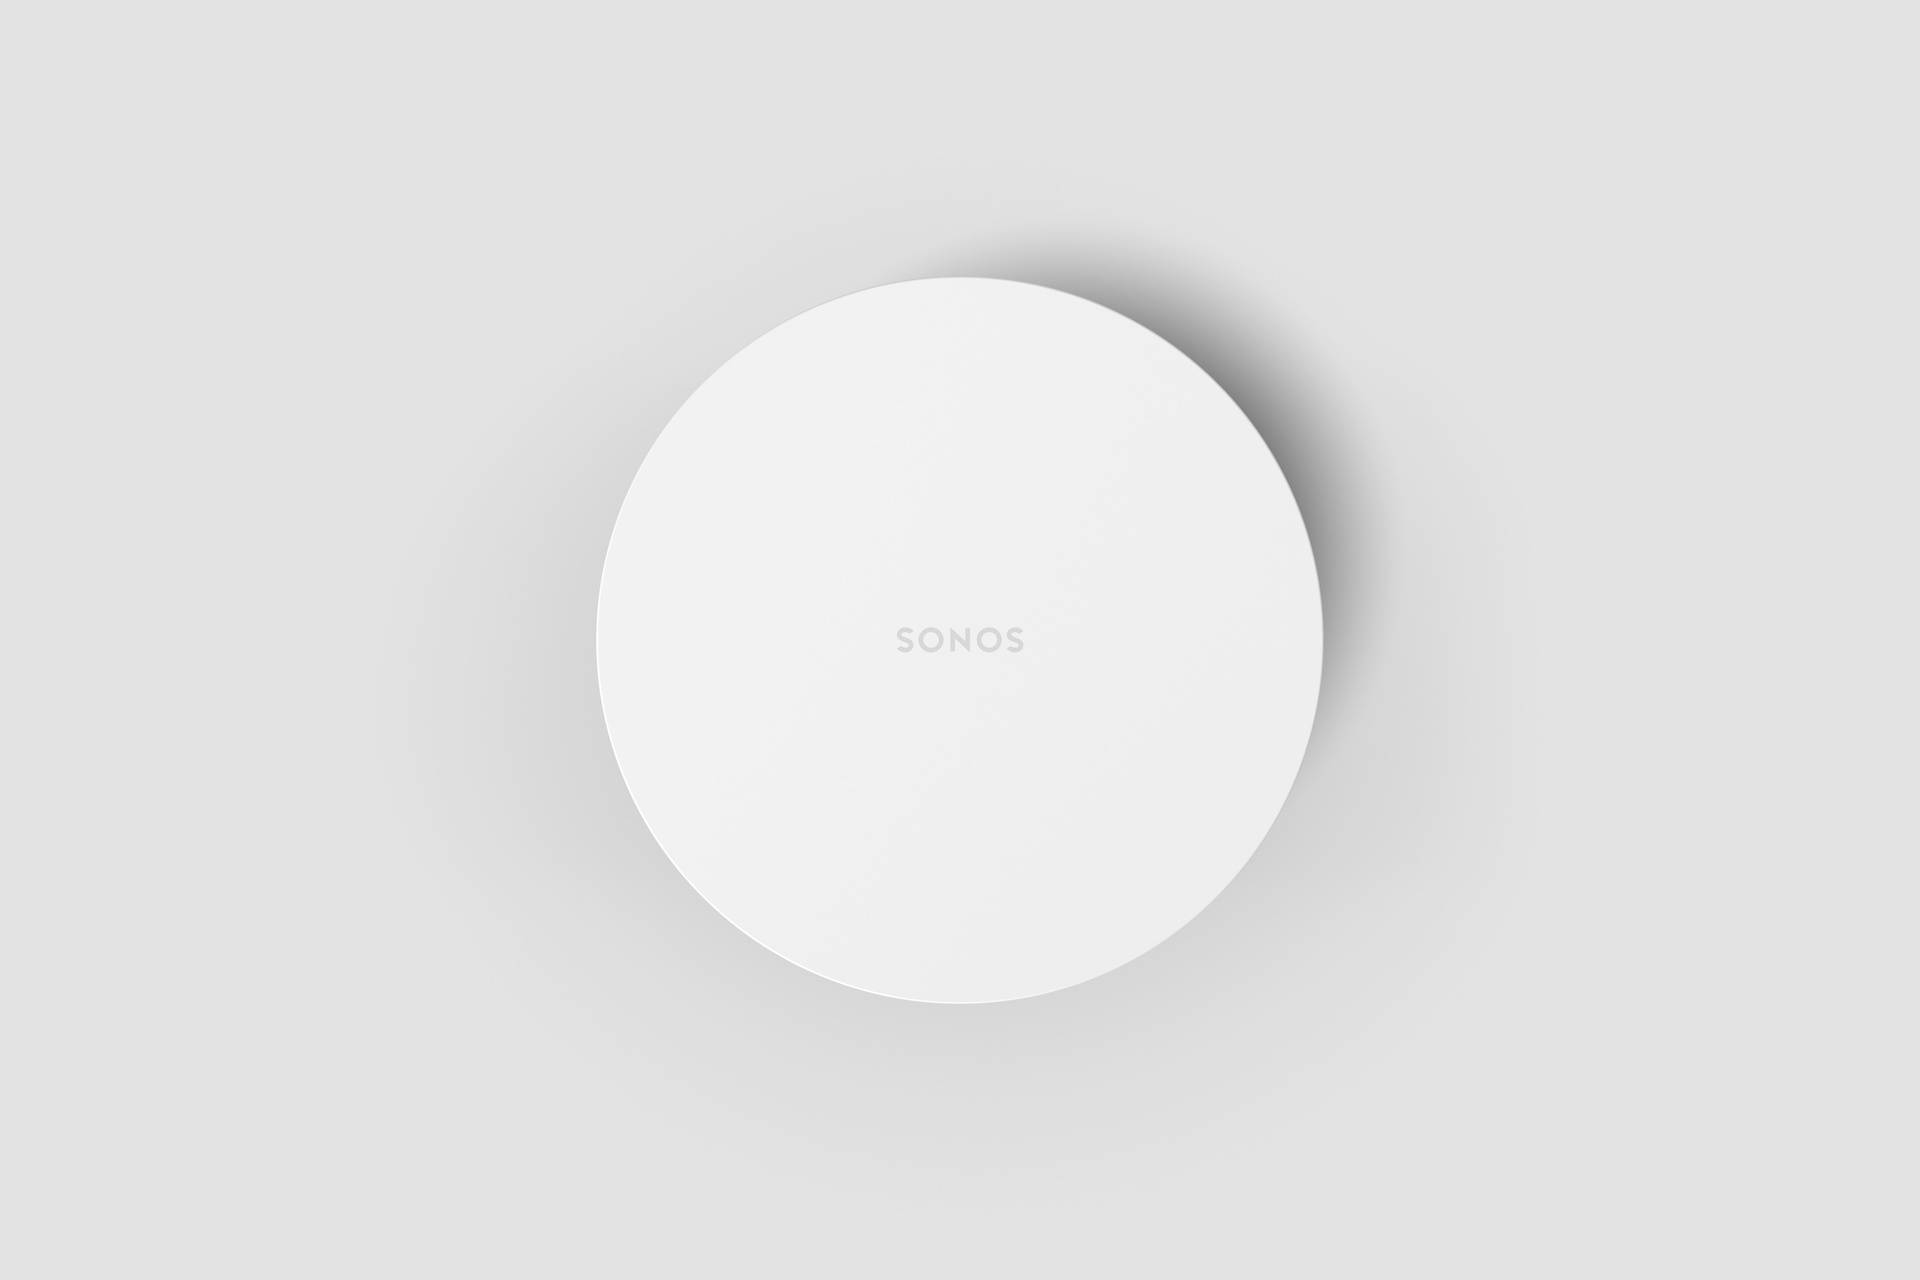 Moćan bas u mini pakiranju: Isprobali smo Sonos Sub mini